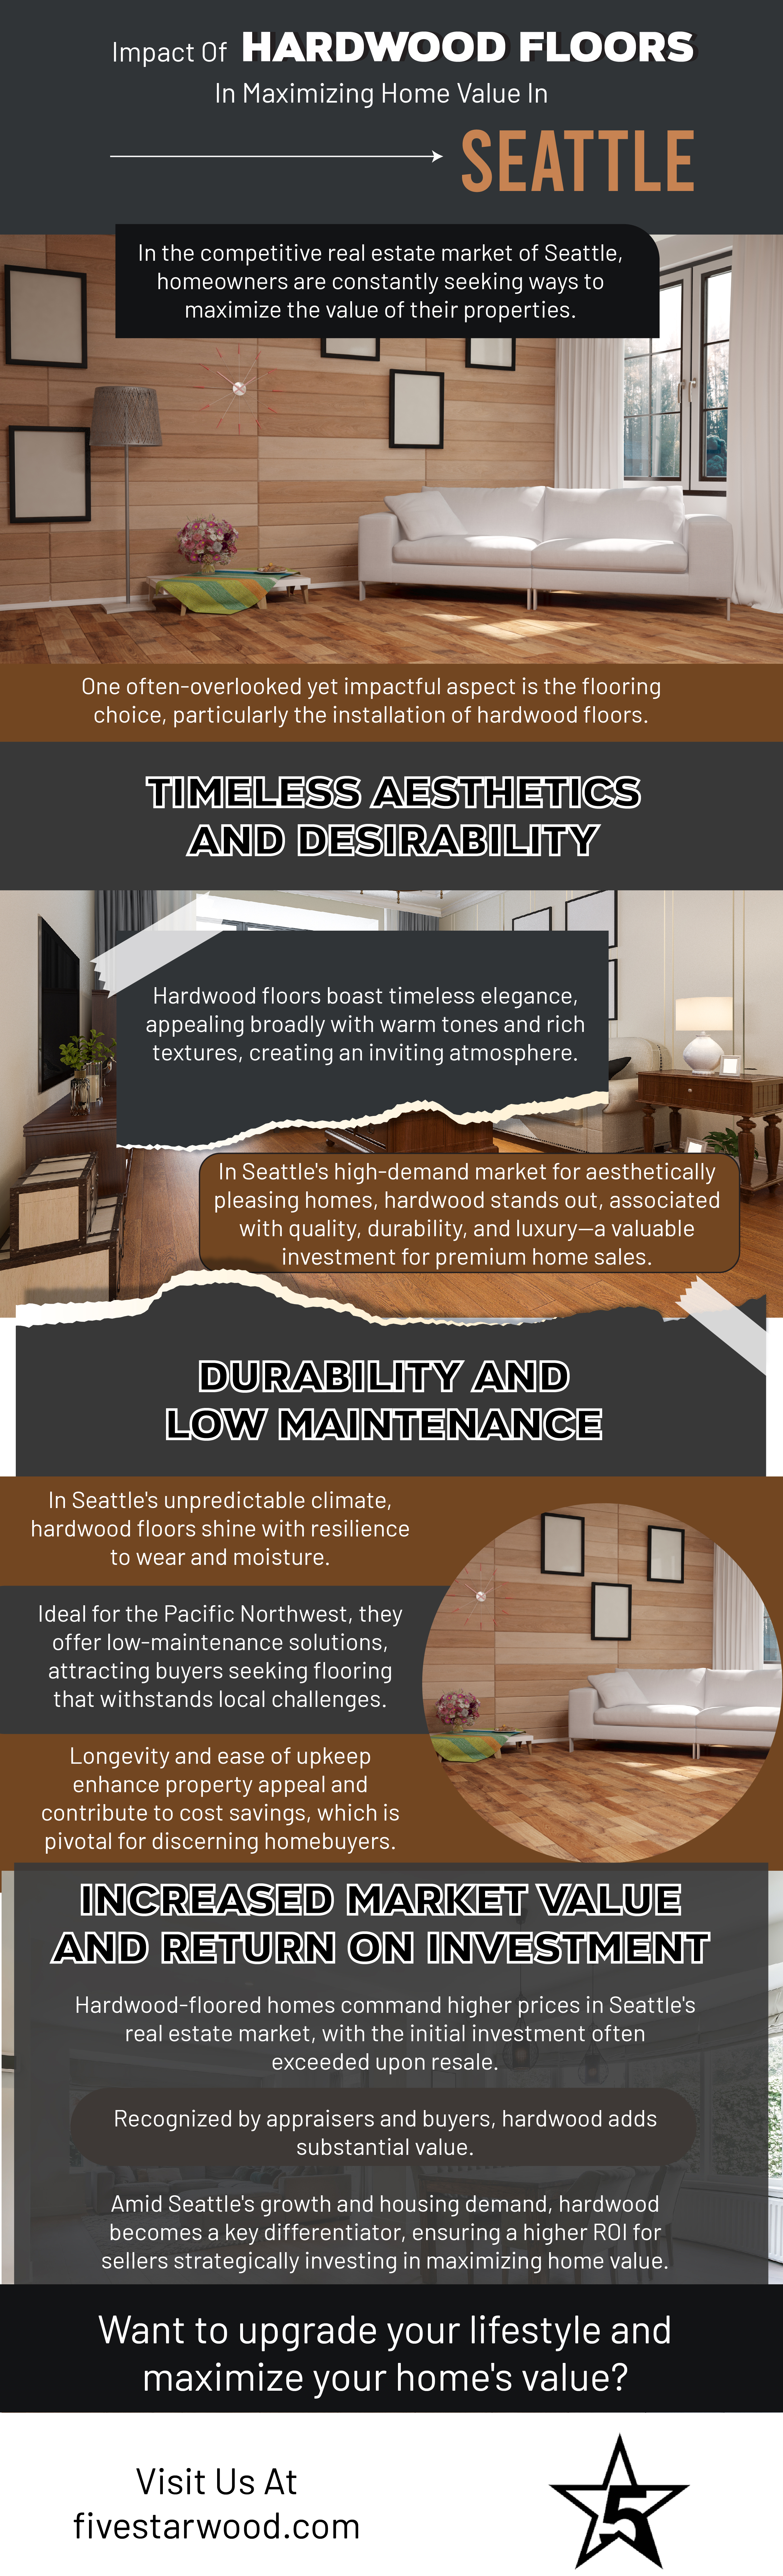 Impat of Hardwood Floors in Maximizing Home value in Seattle